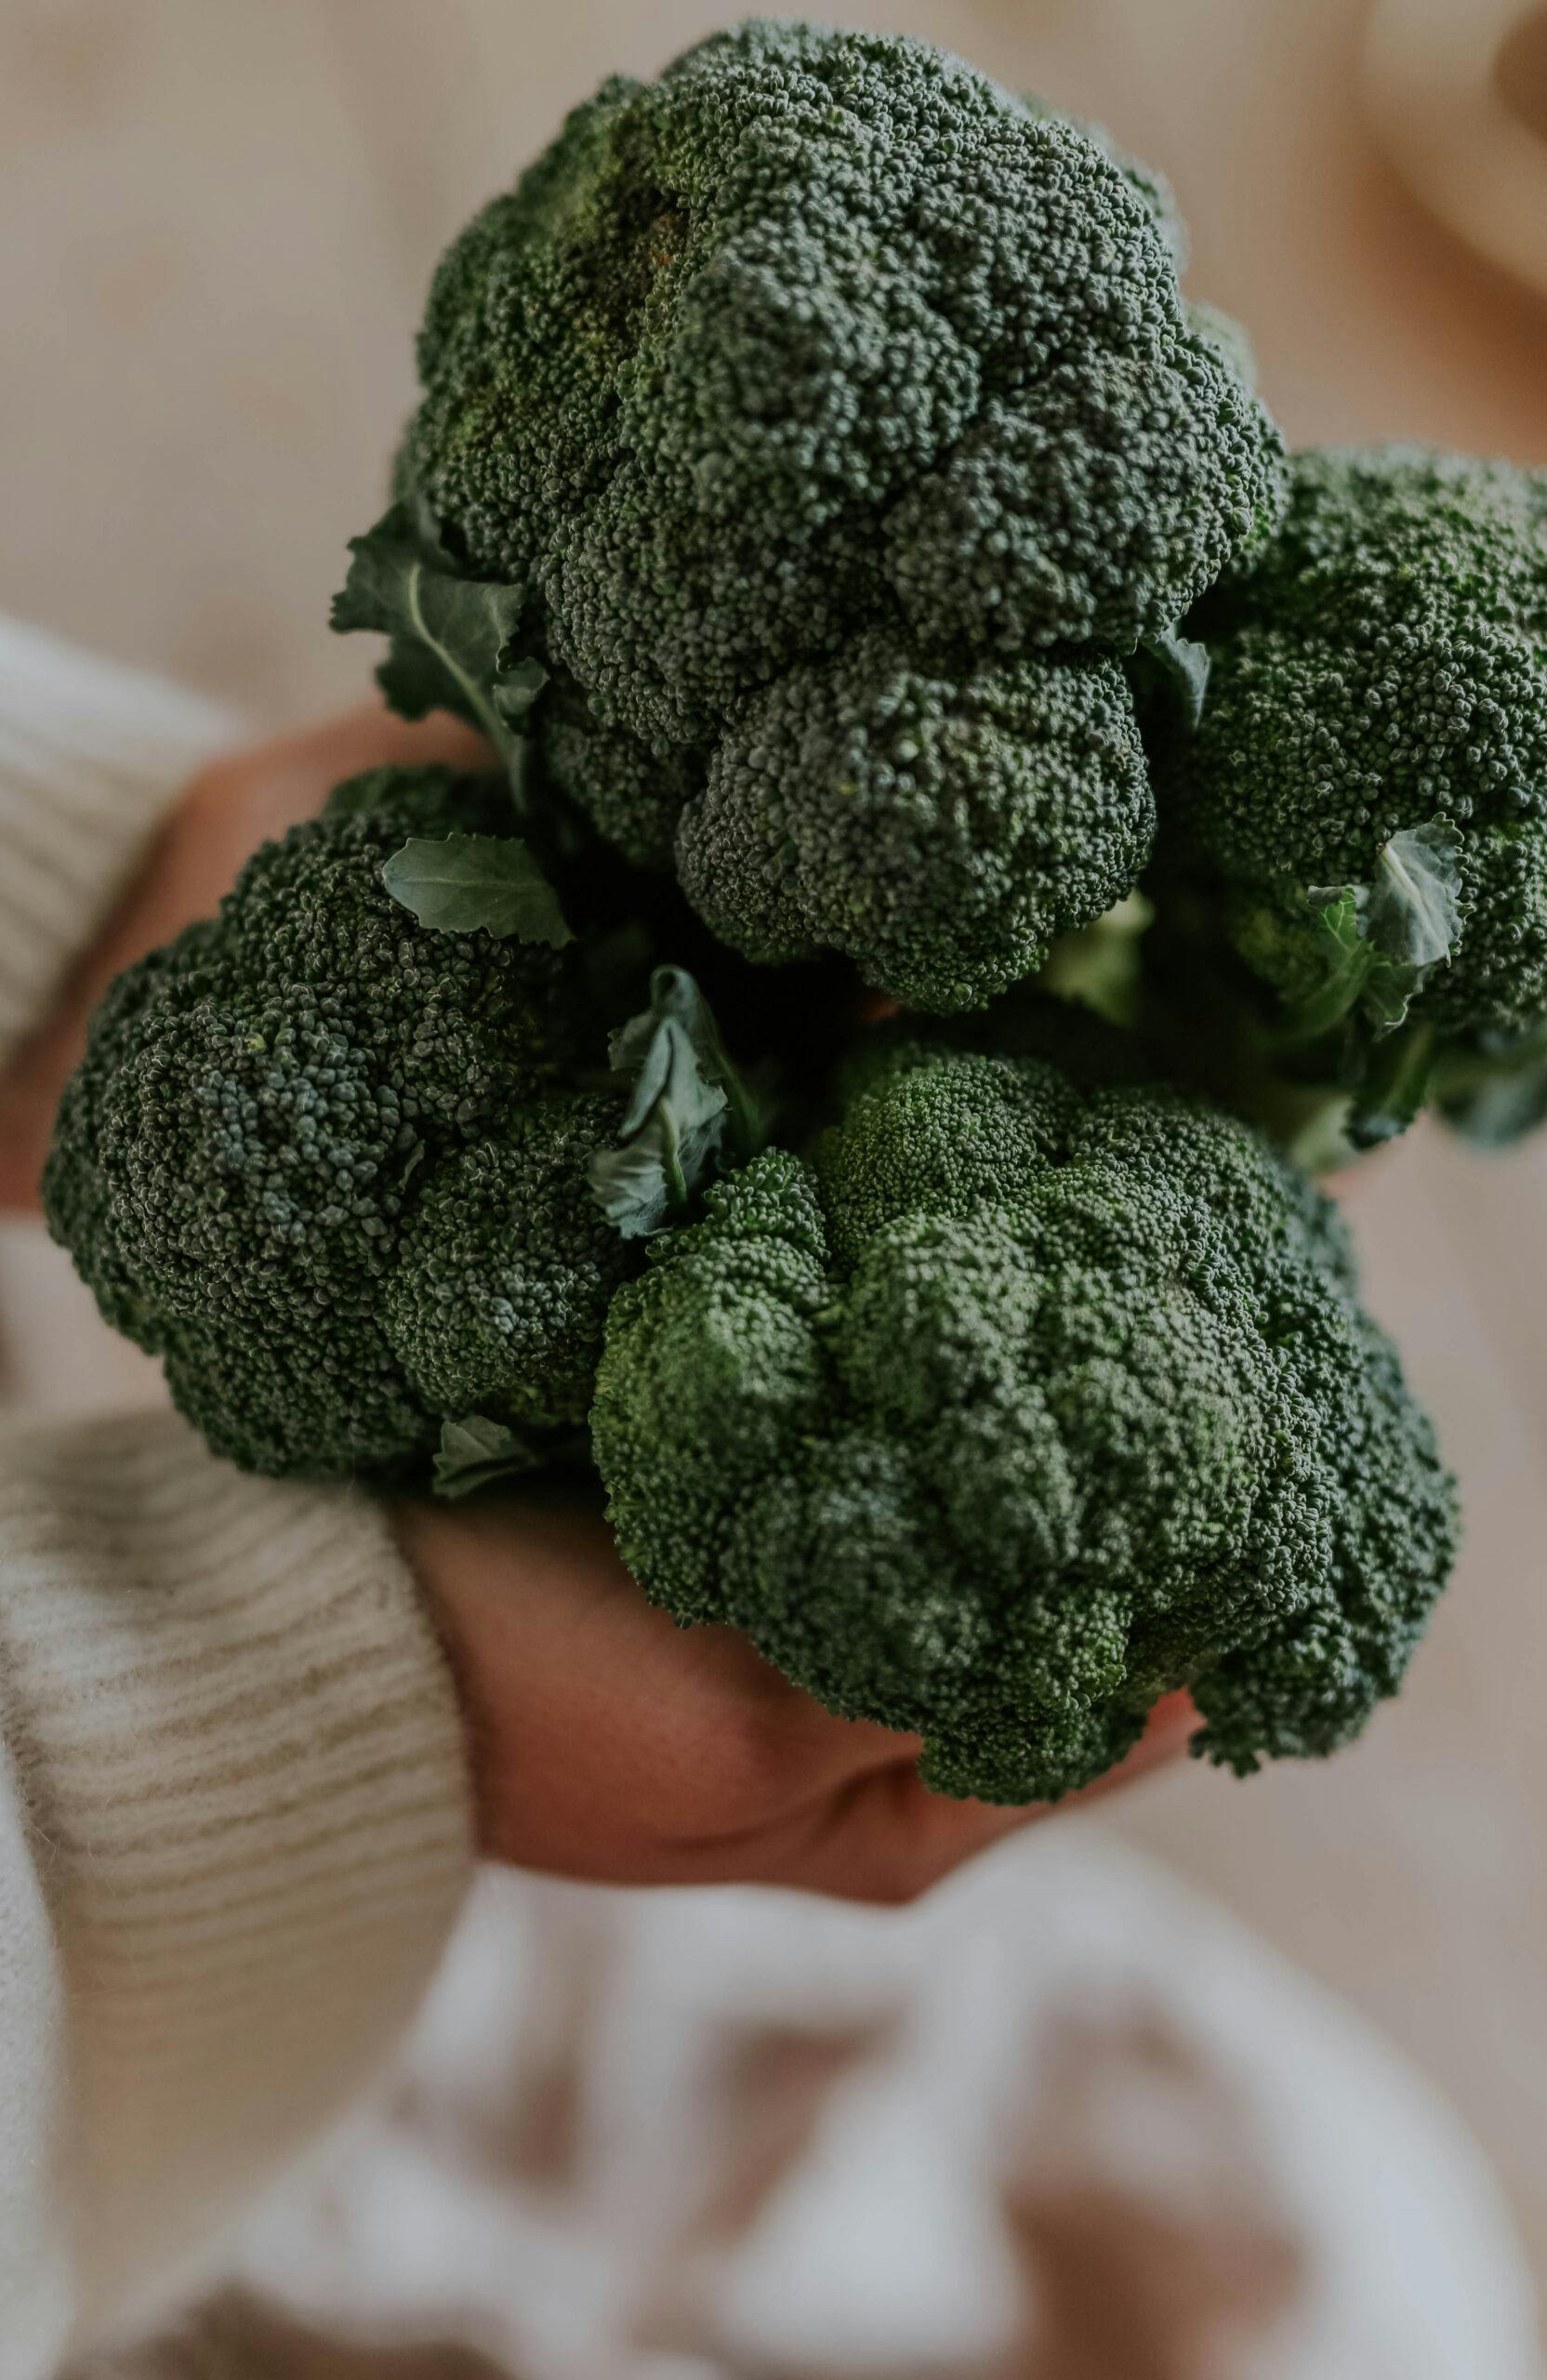 Broccoli seeds